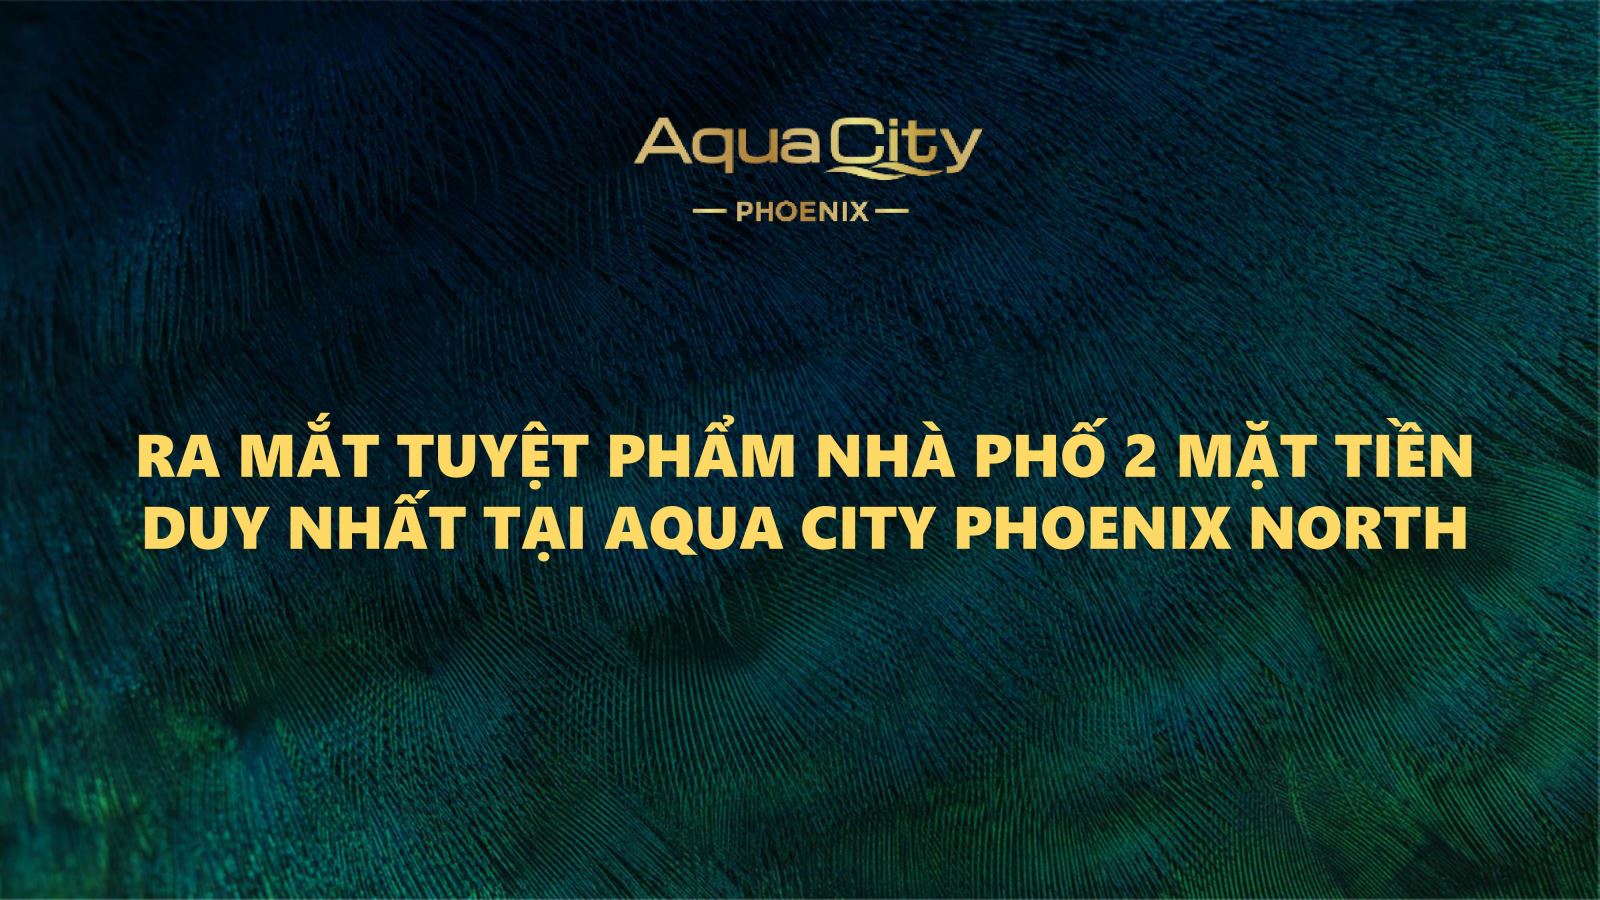 aqua-city-dao-phuong-hoang-7.2021